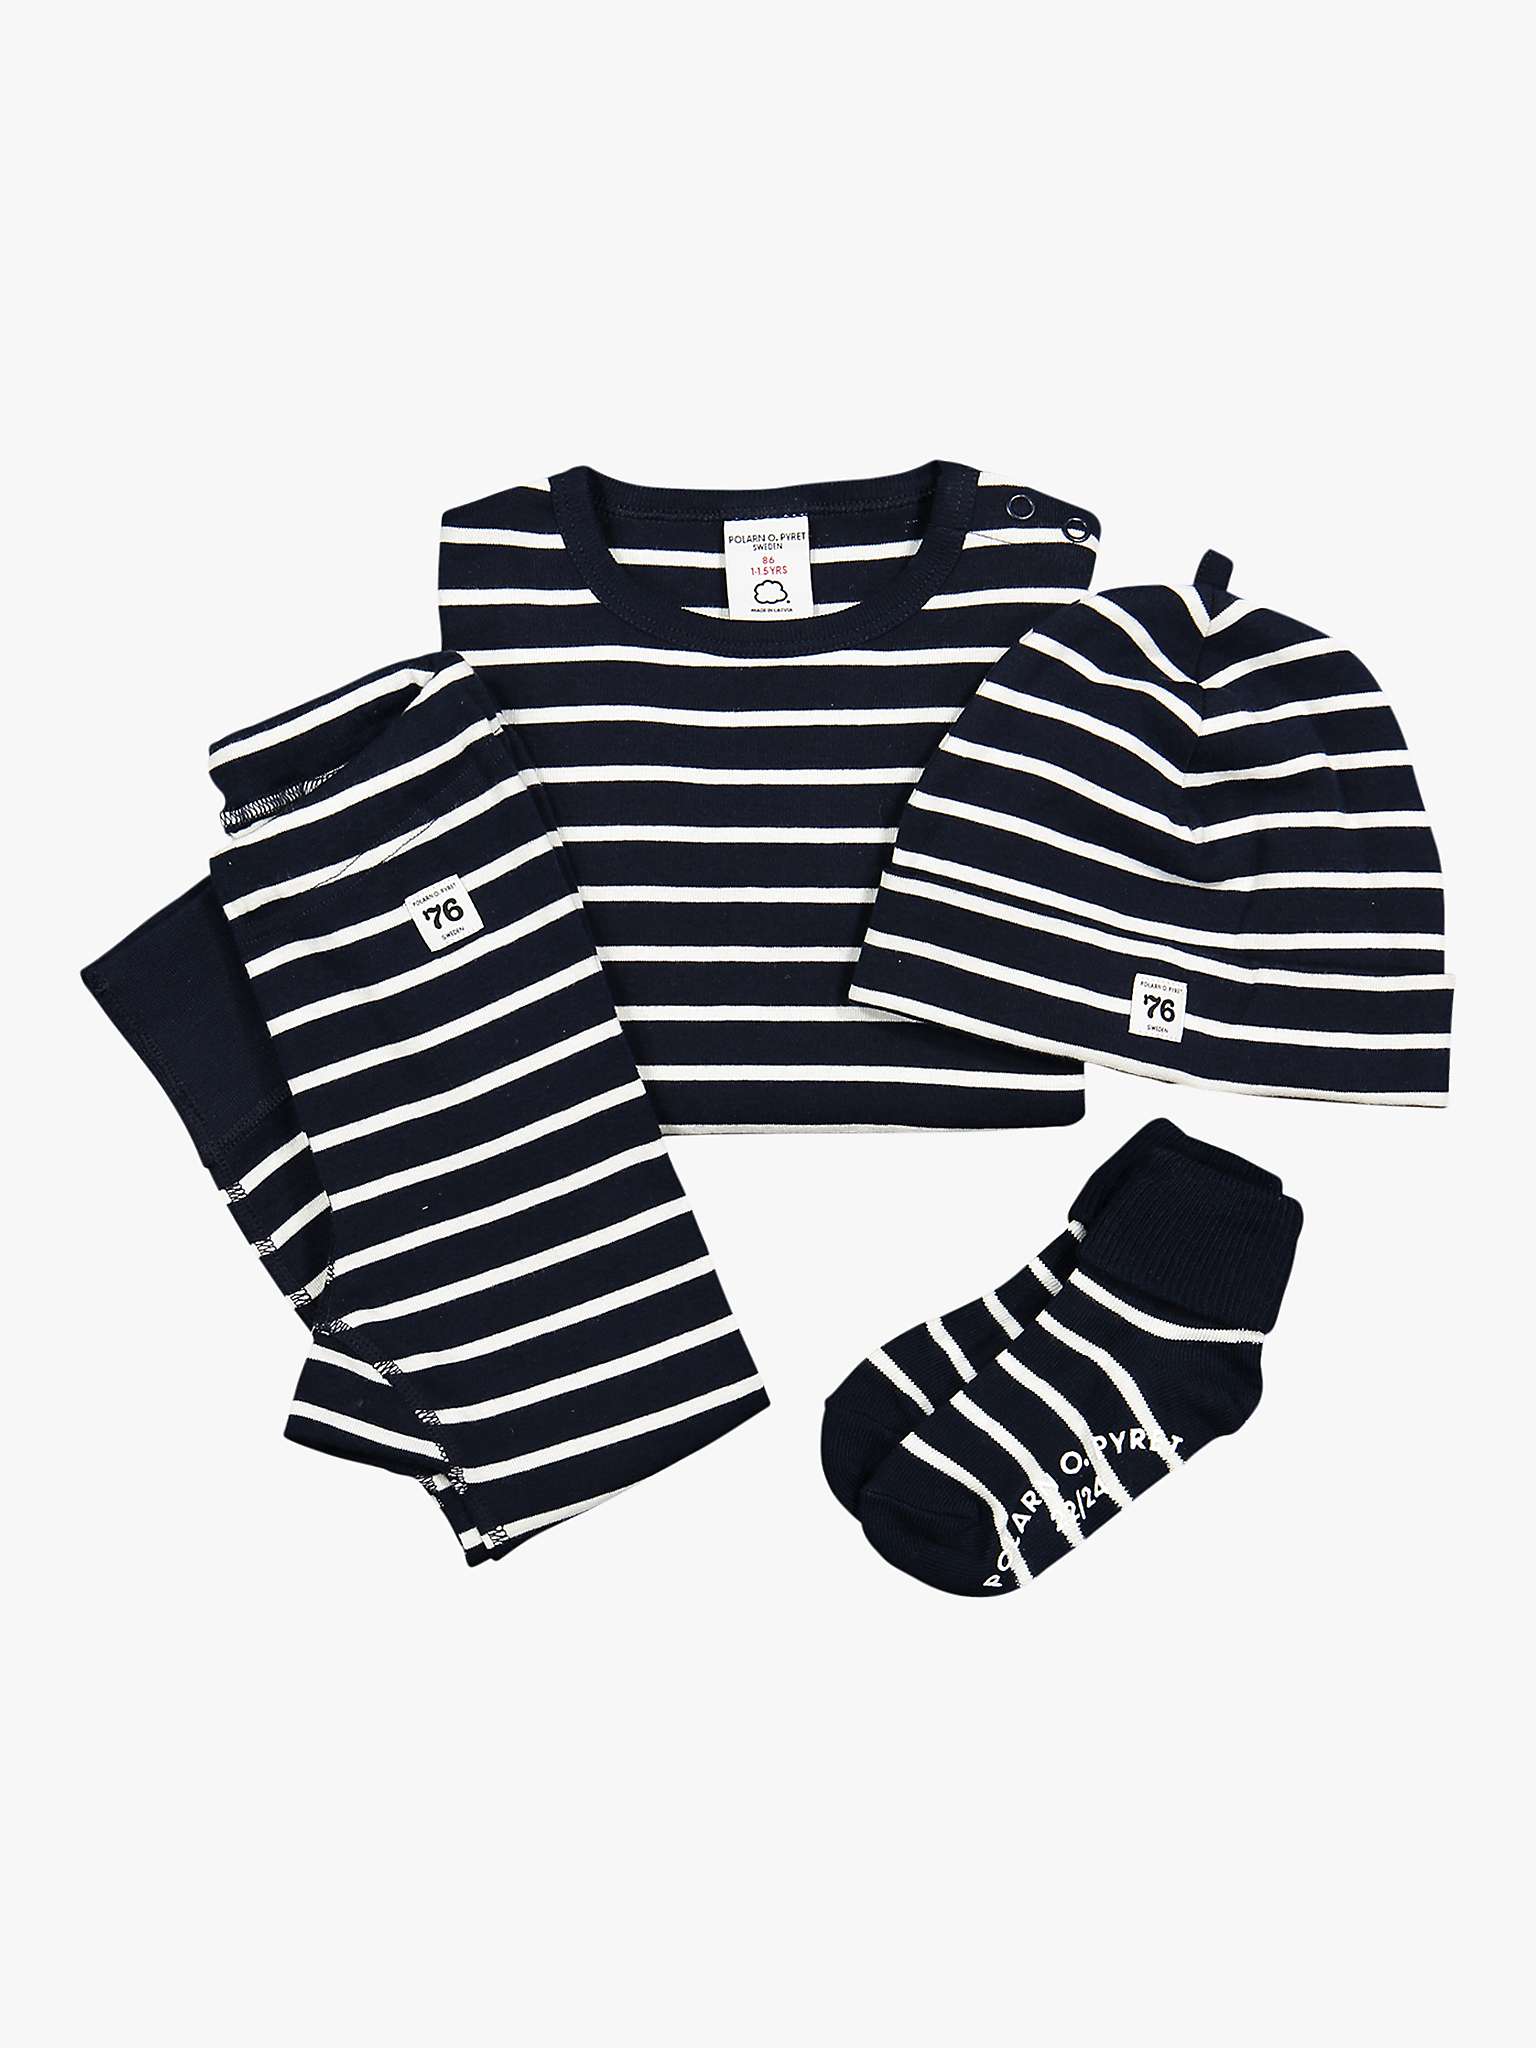 Buy Polarn O. Pyret Baby GOTS Organic Cotton Stripe Top Online at johnlewis.com